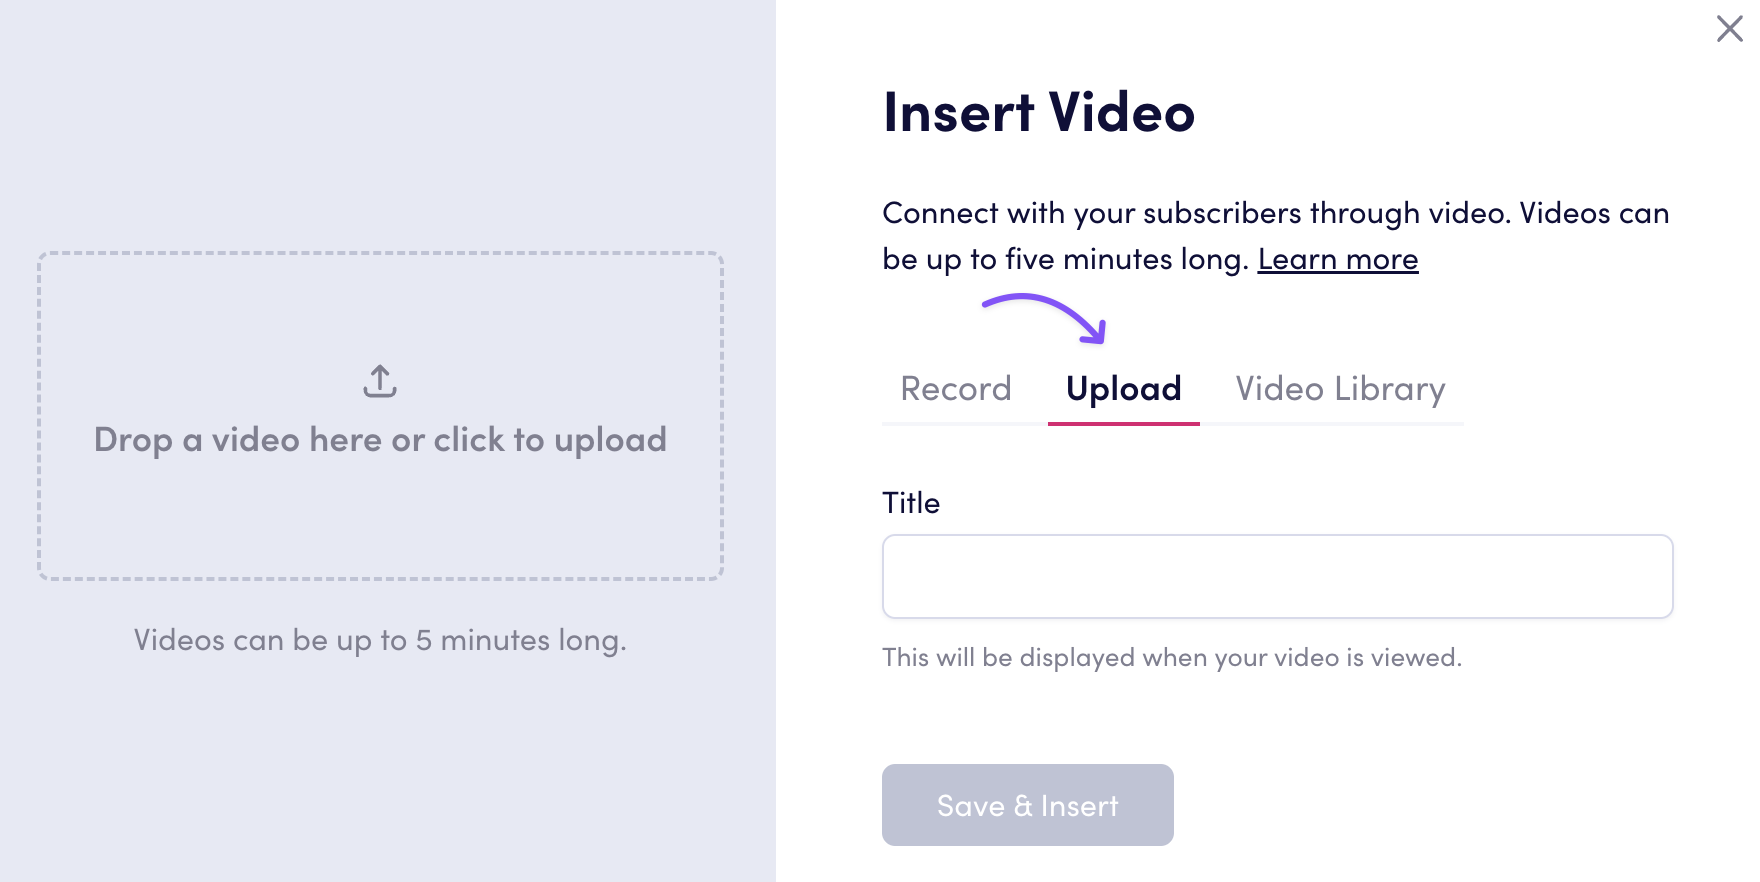 Insert Video - Upload